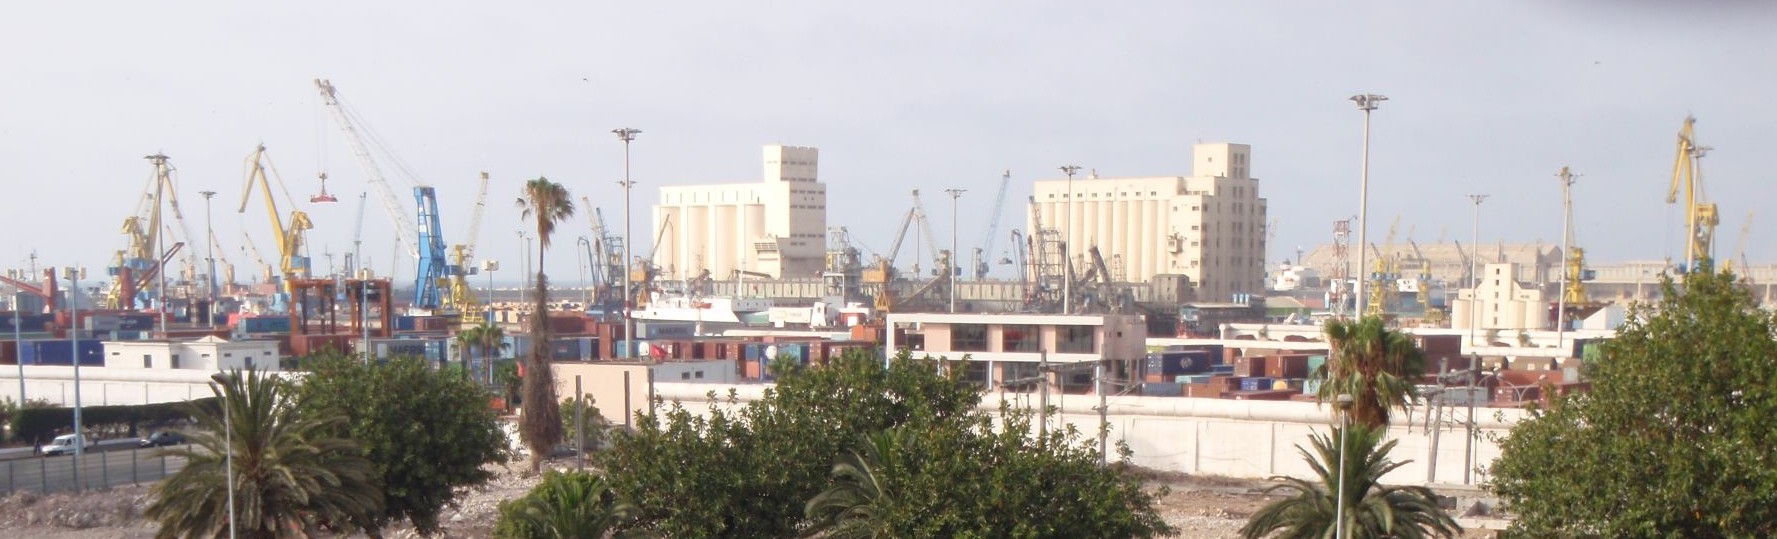 Industry in the harbour of Casablanca